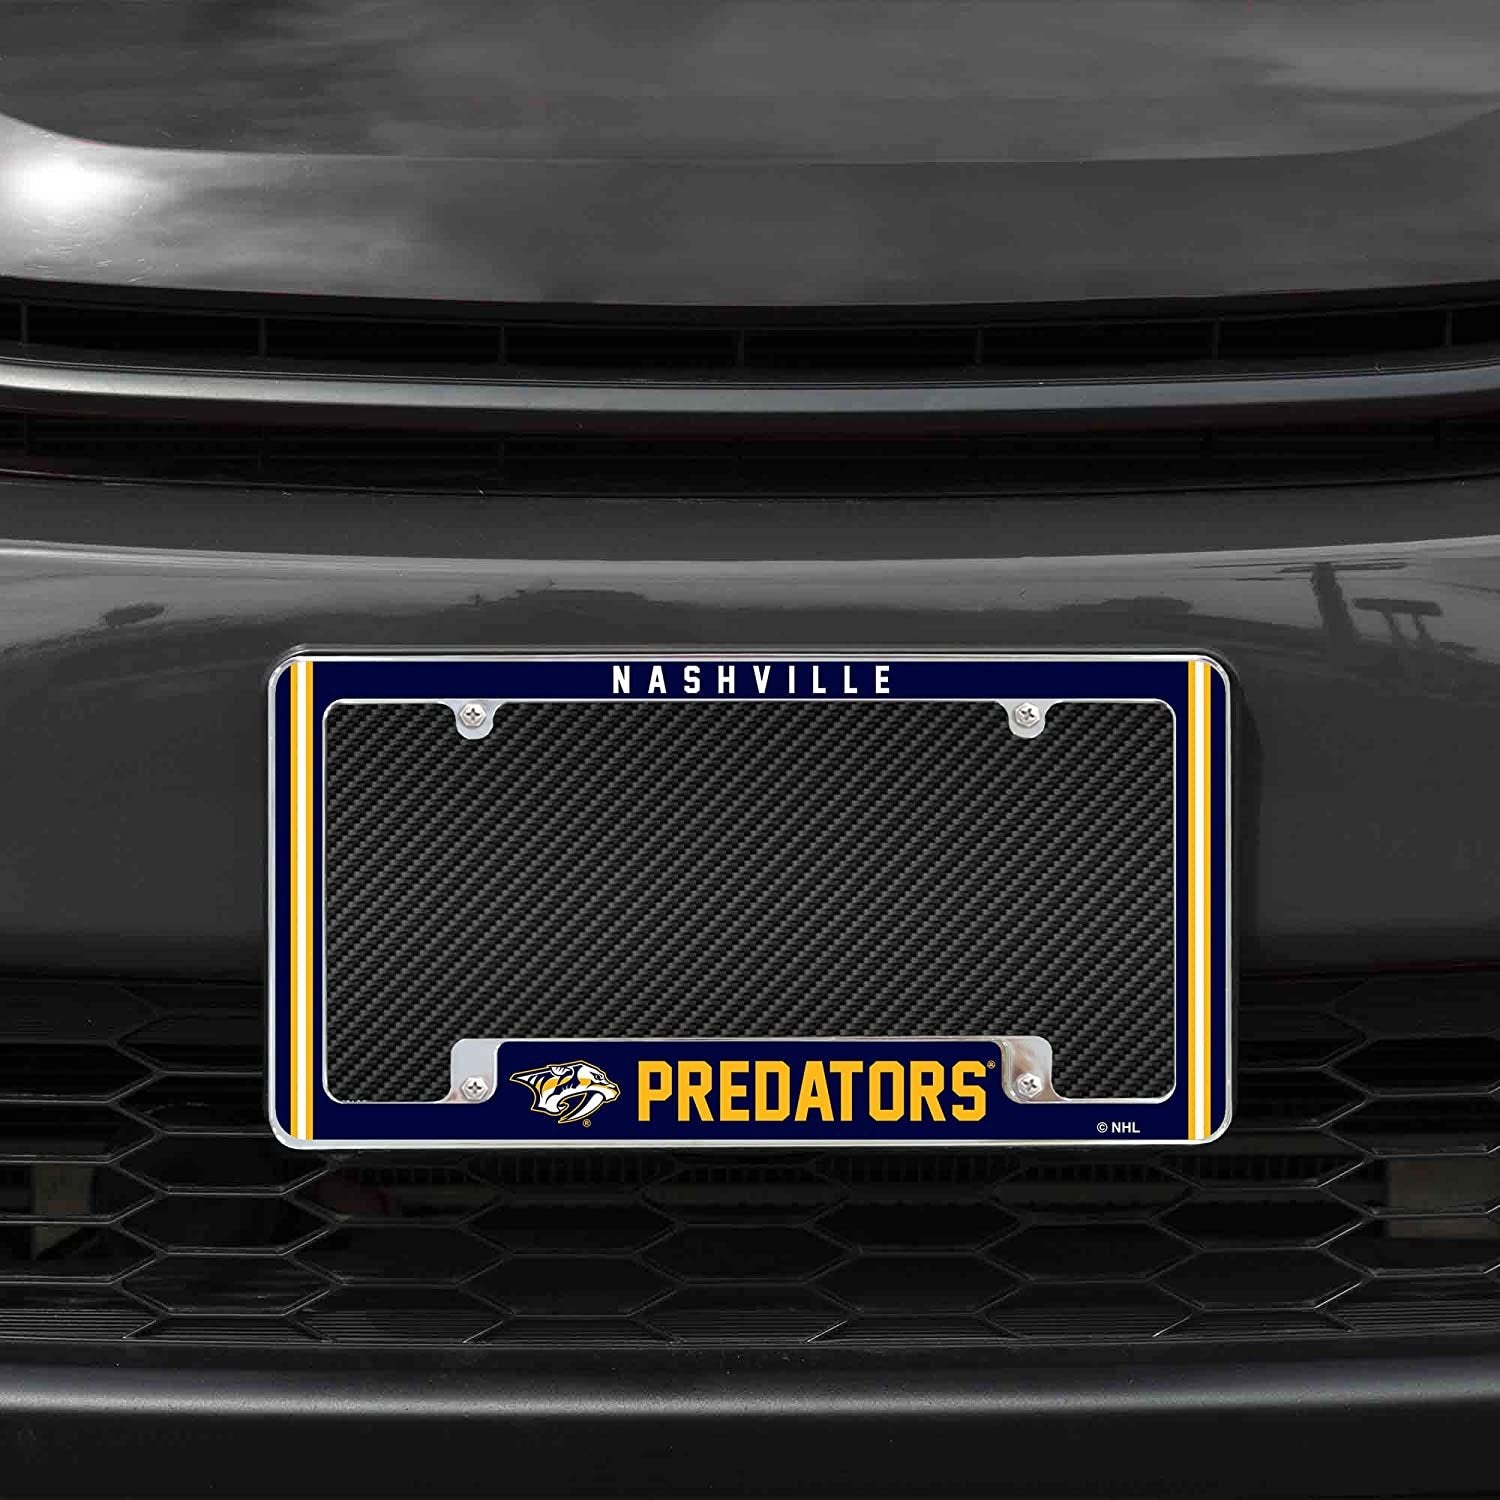 Nashville Predators Metal License Plate Frame Chrome Tag Cover Alternate Design 6x12 Inch